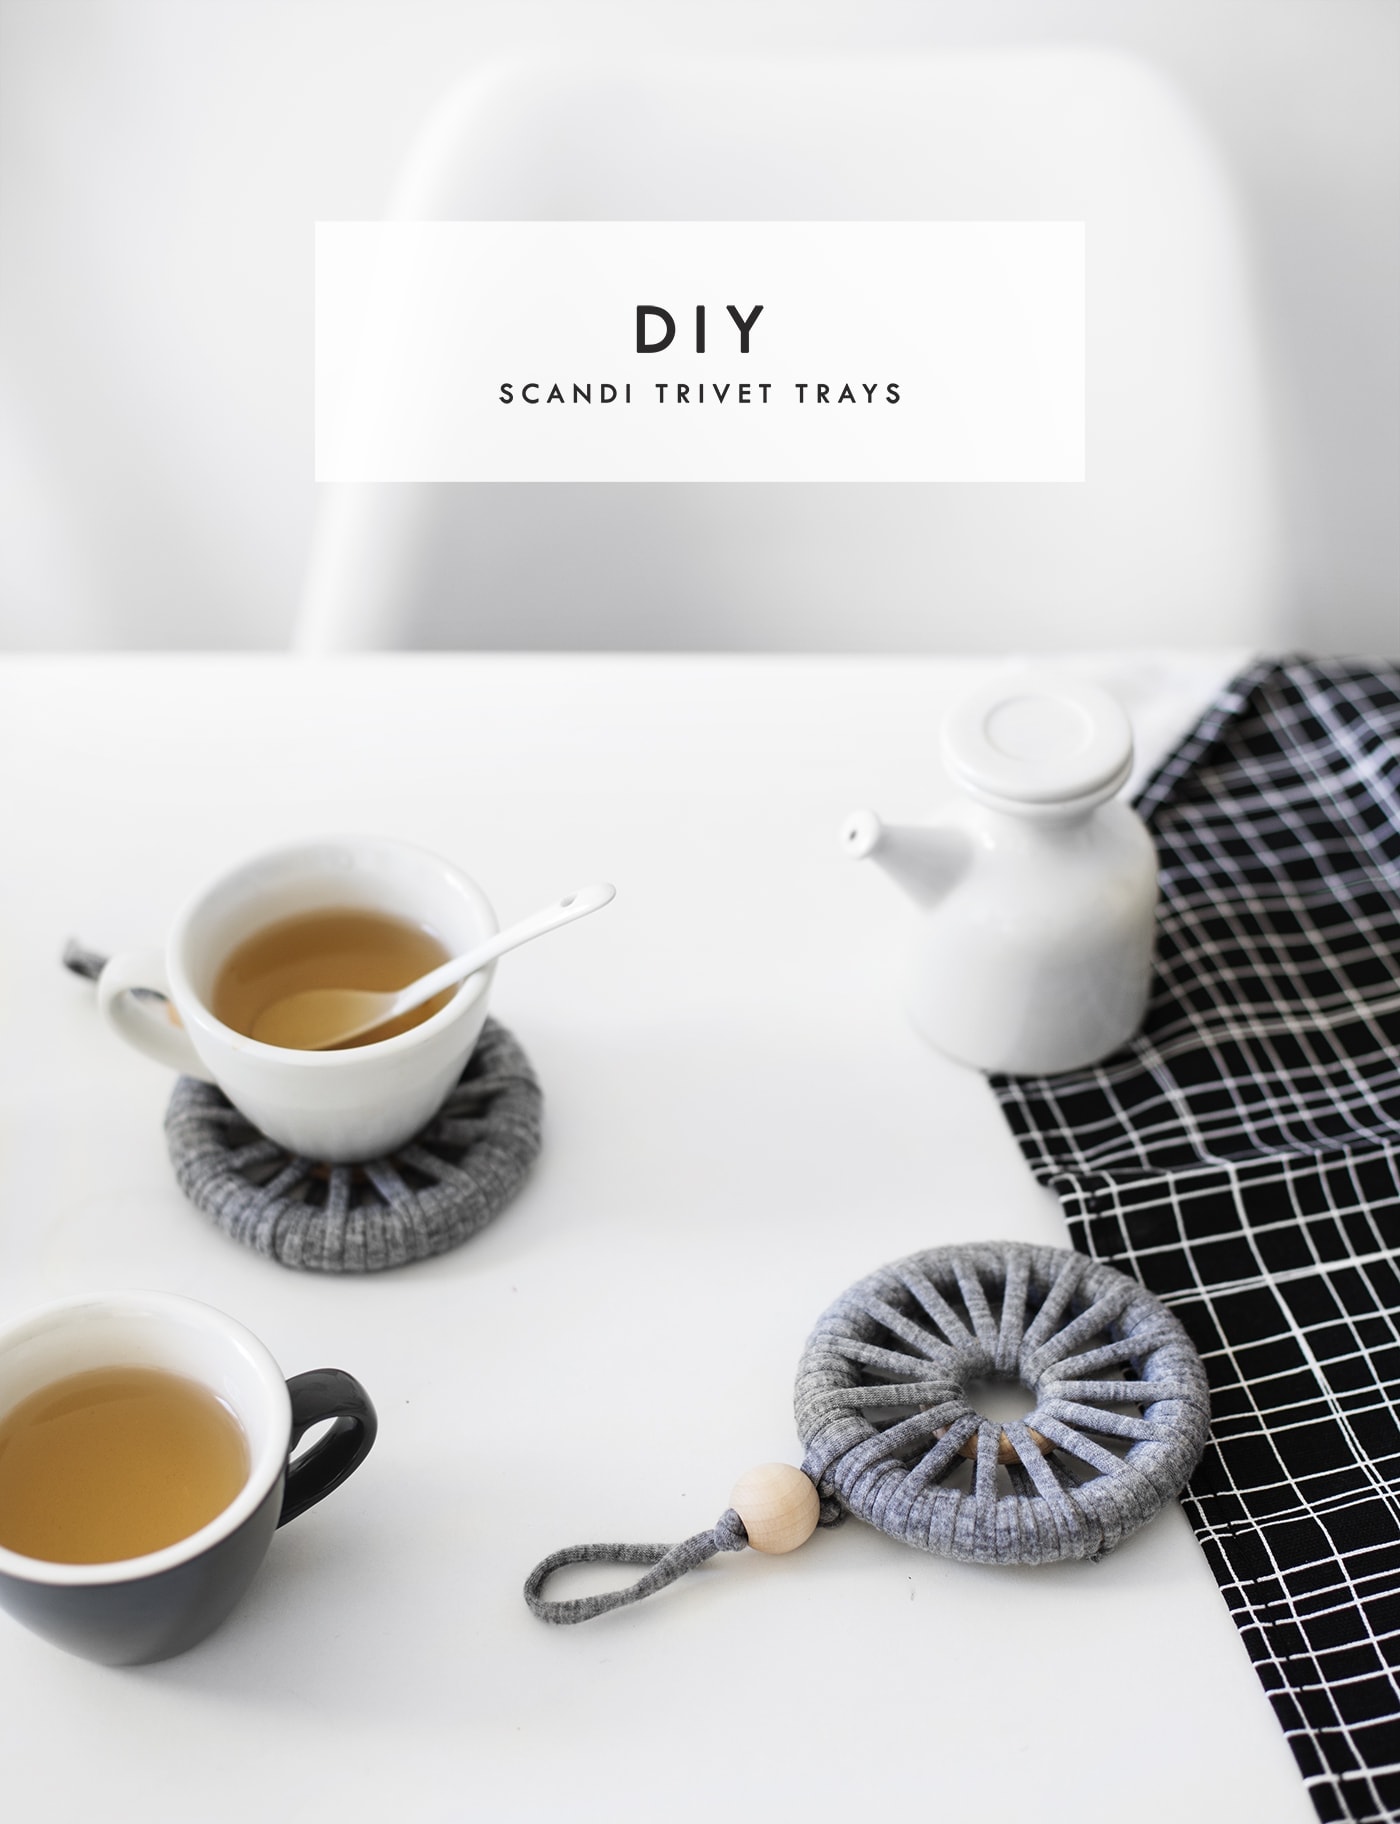 diy-scandi-trivet-tray-home-ideas-craft-ideas